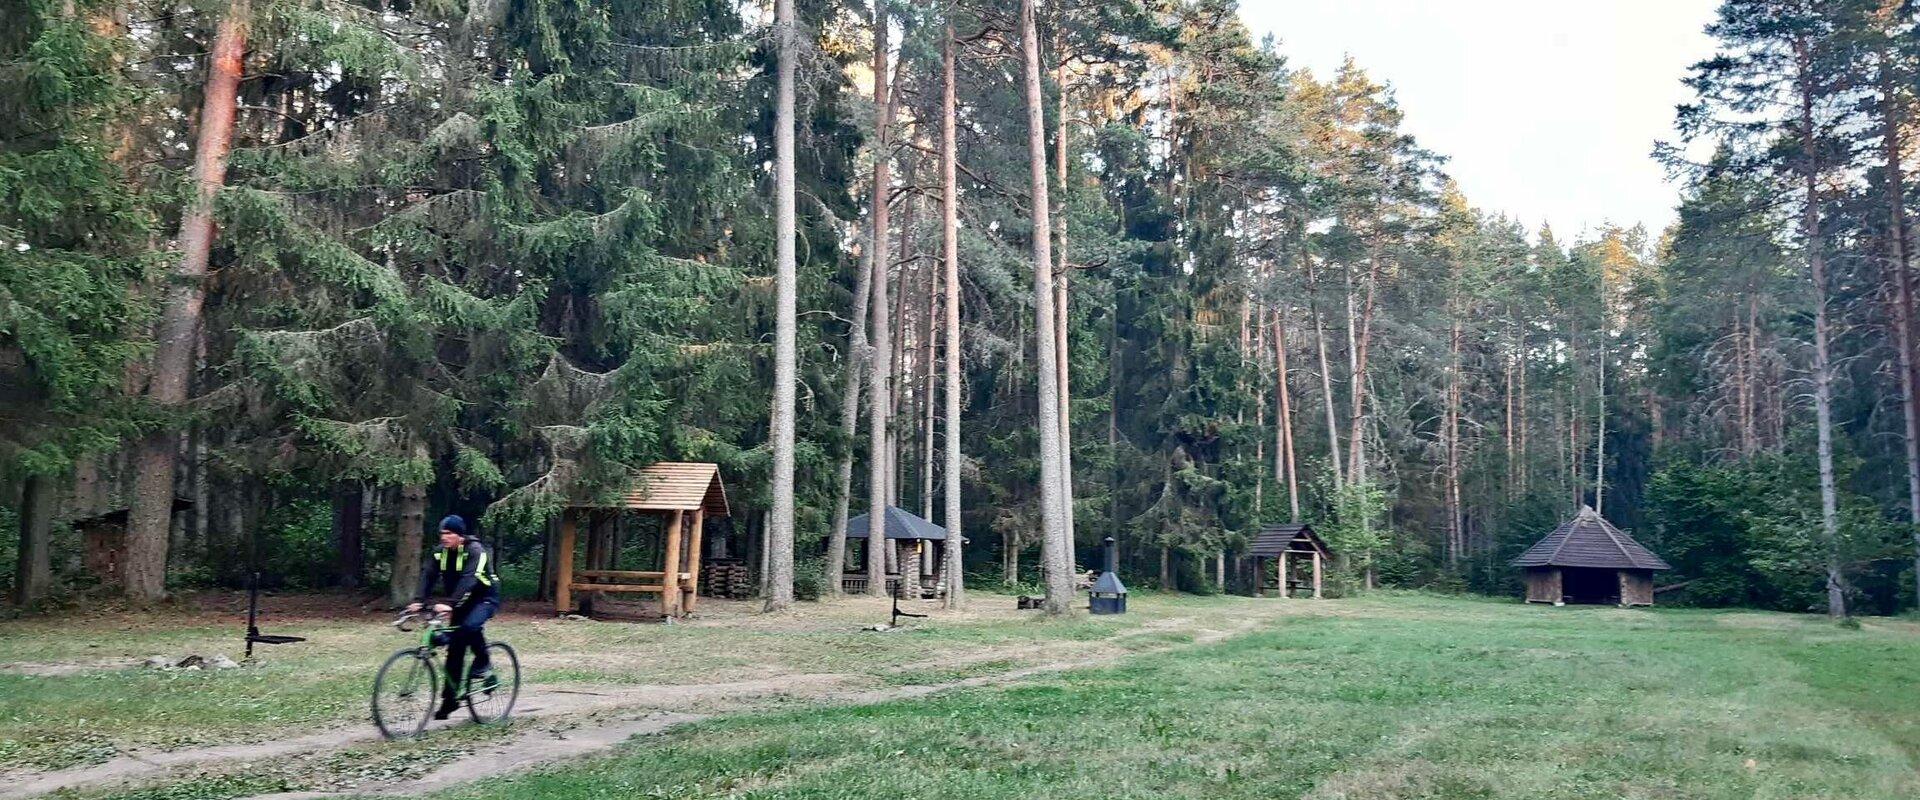 Illi camping area